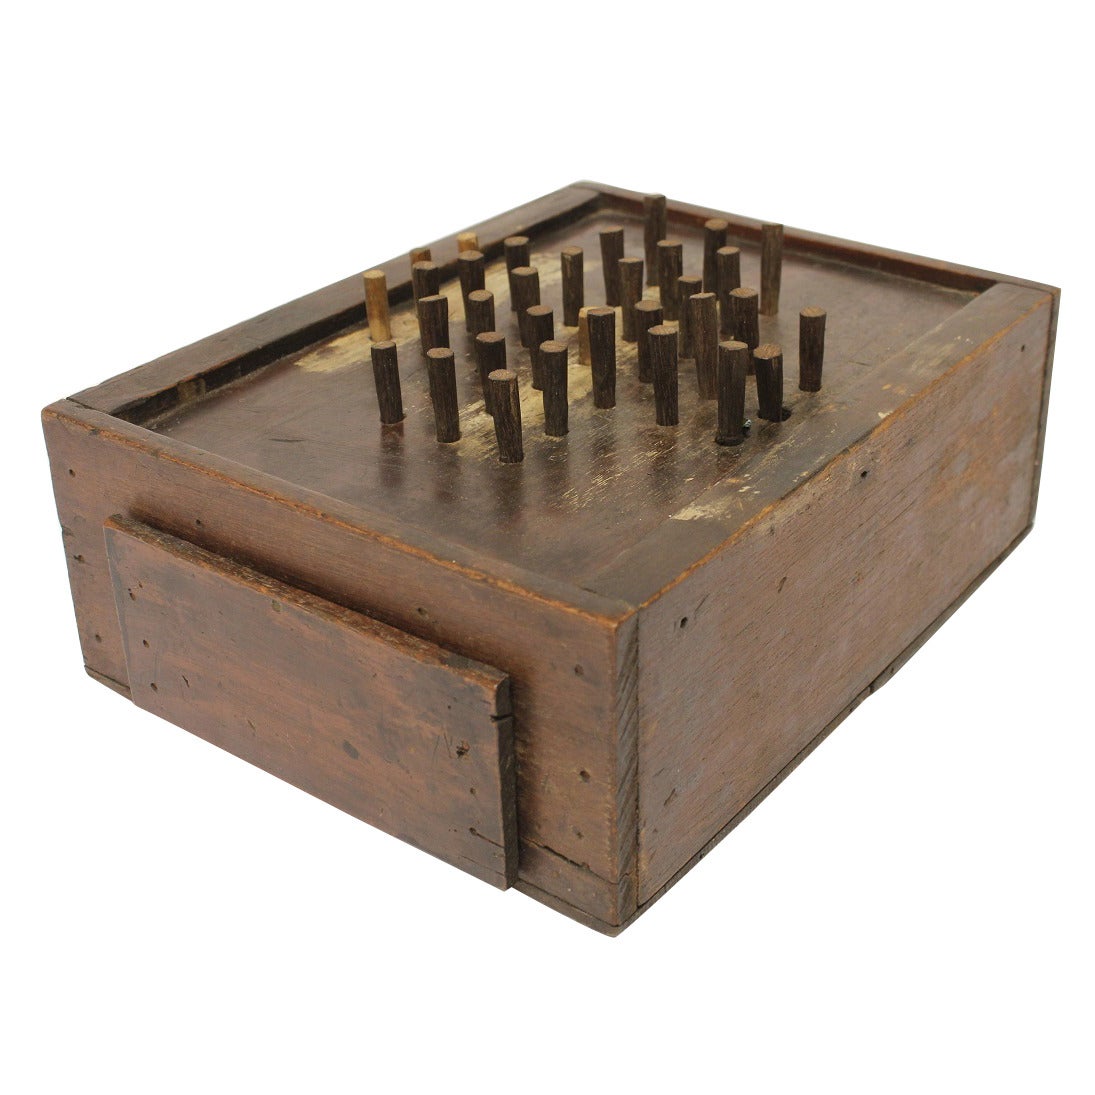 Antique Folk Art Aggravation Wooden Box Peg Board Game For Sale